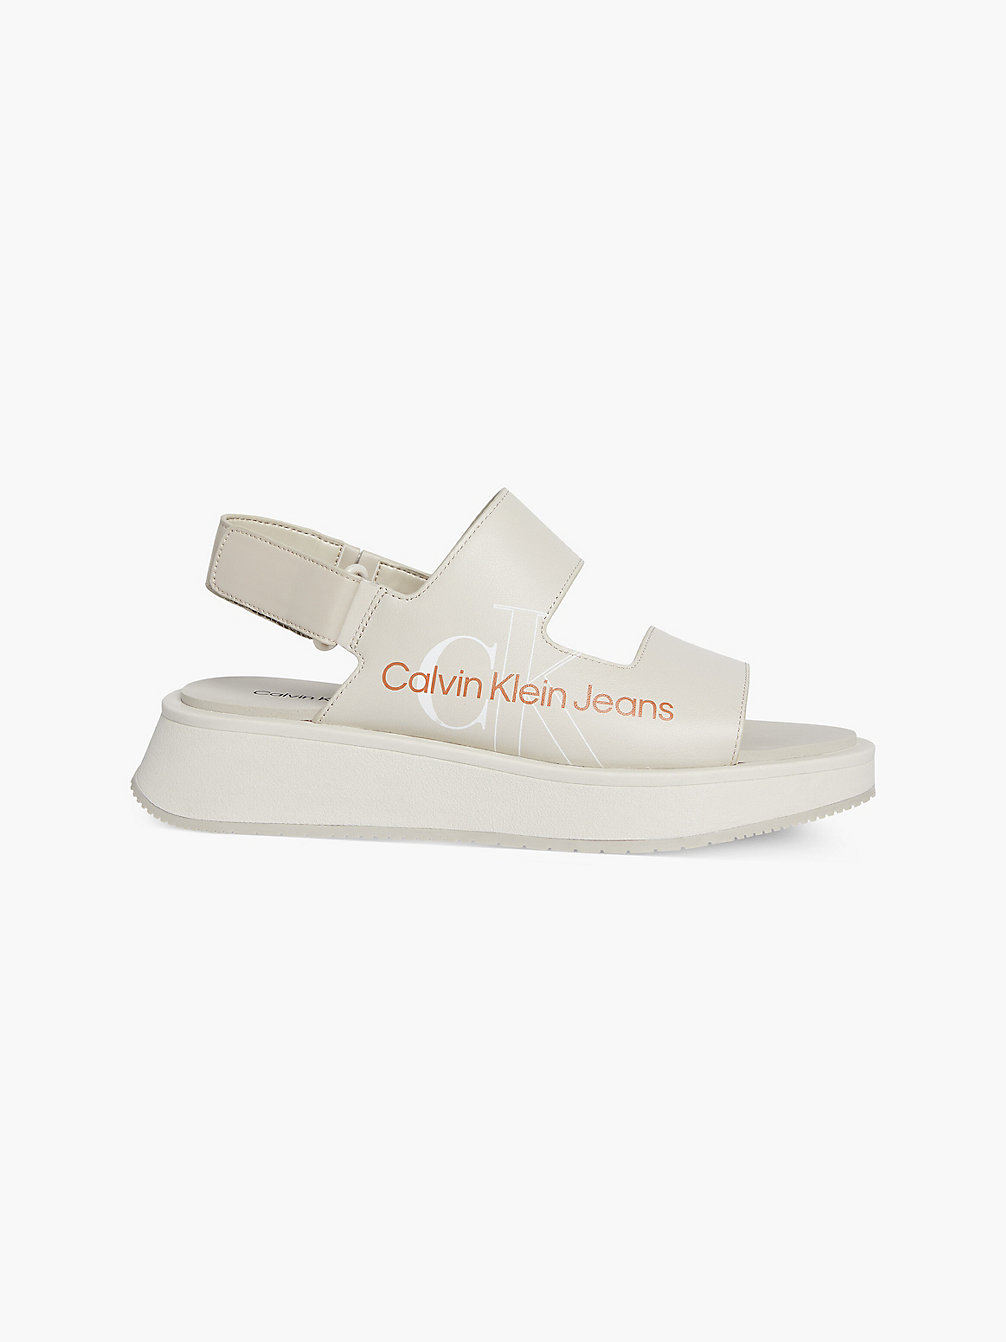 EGGSHELL Leather Sandals undefined women Calvin Klein